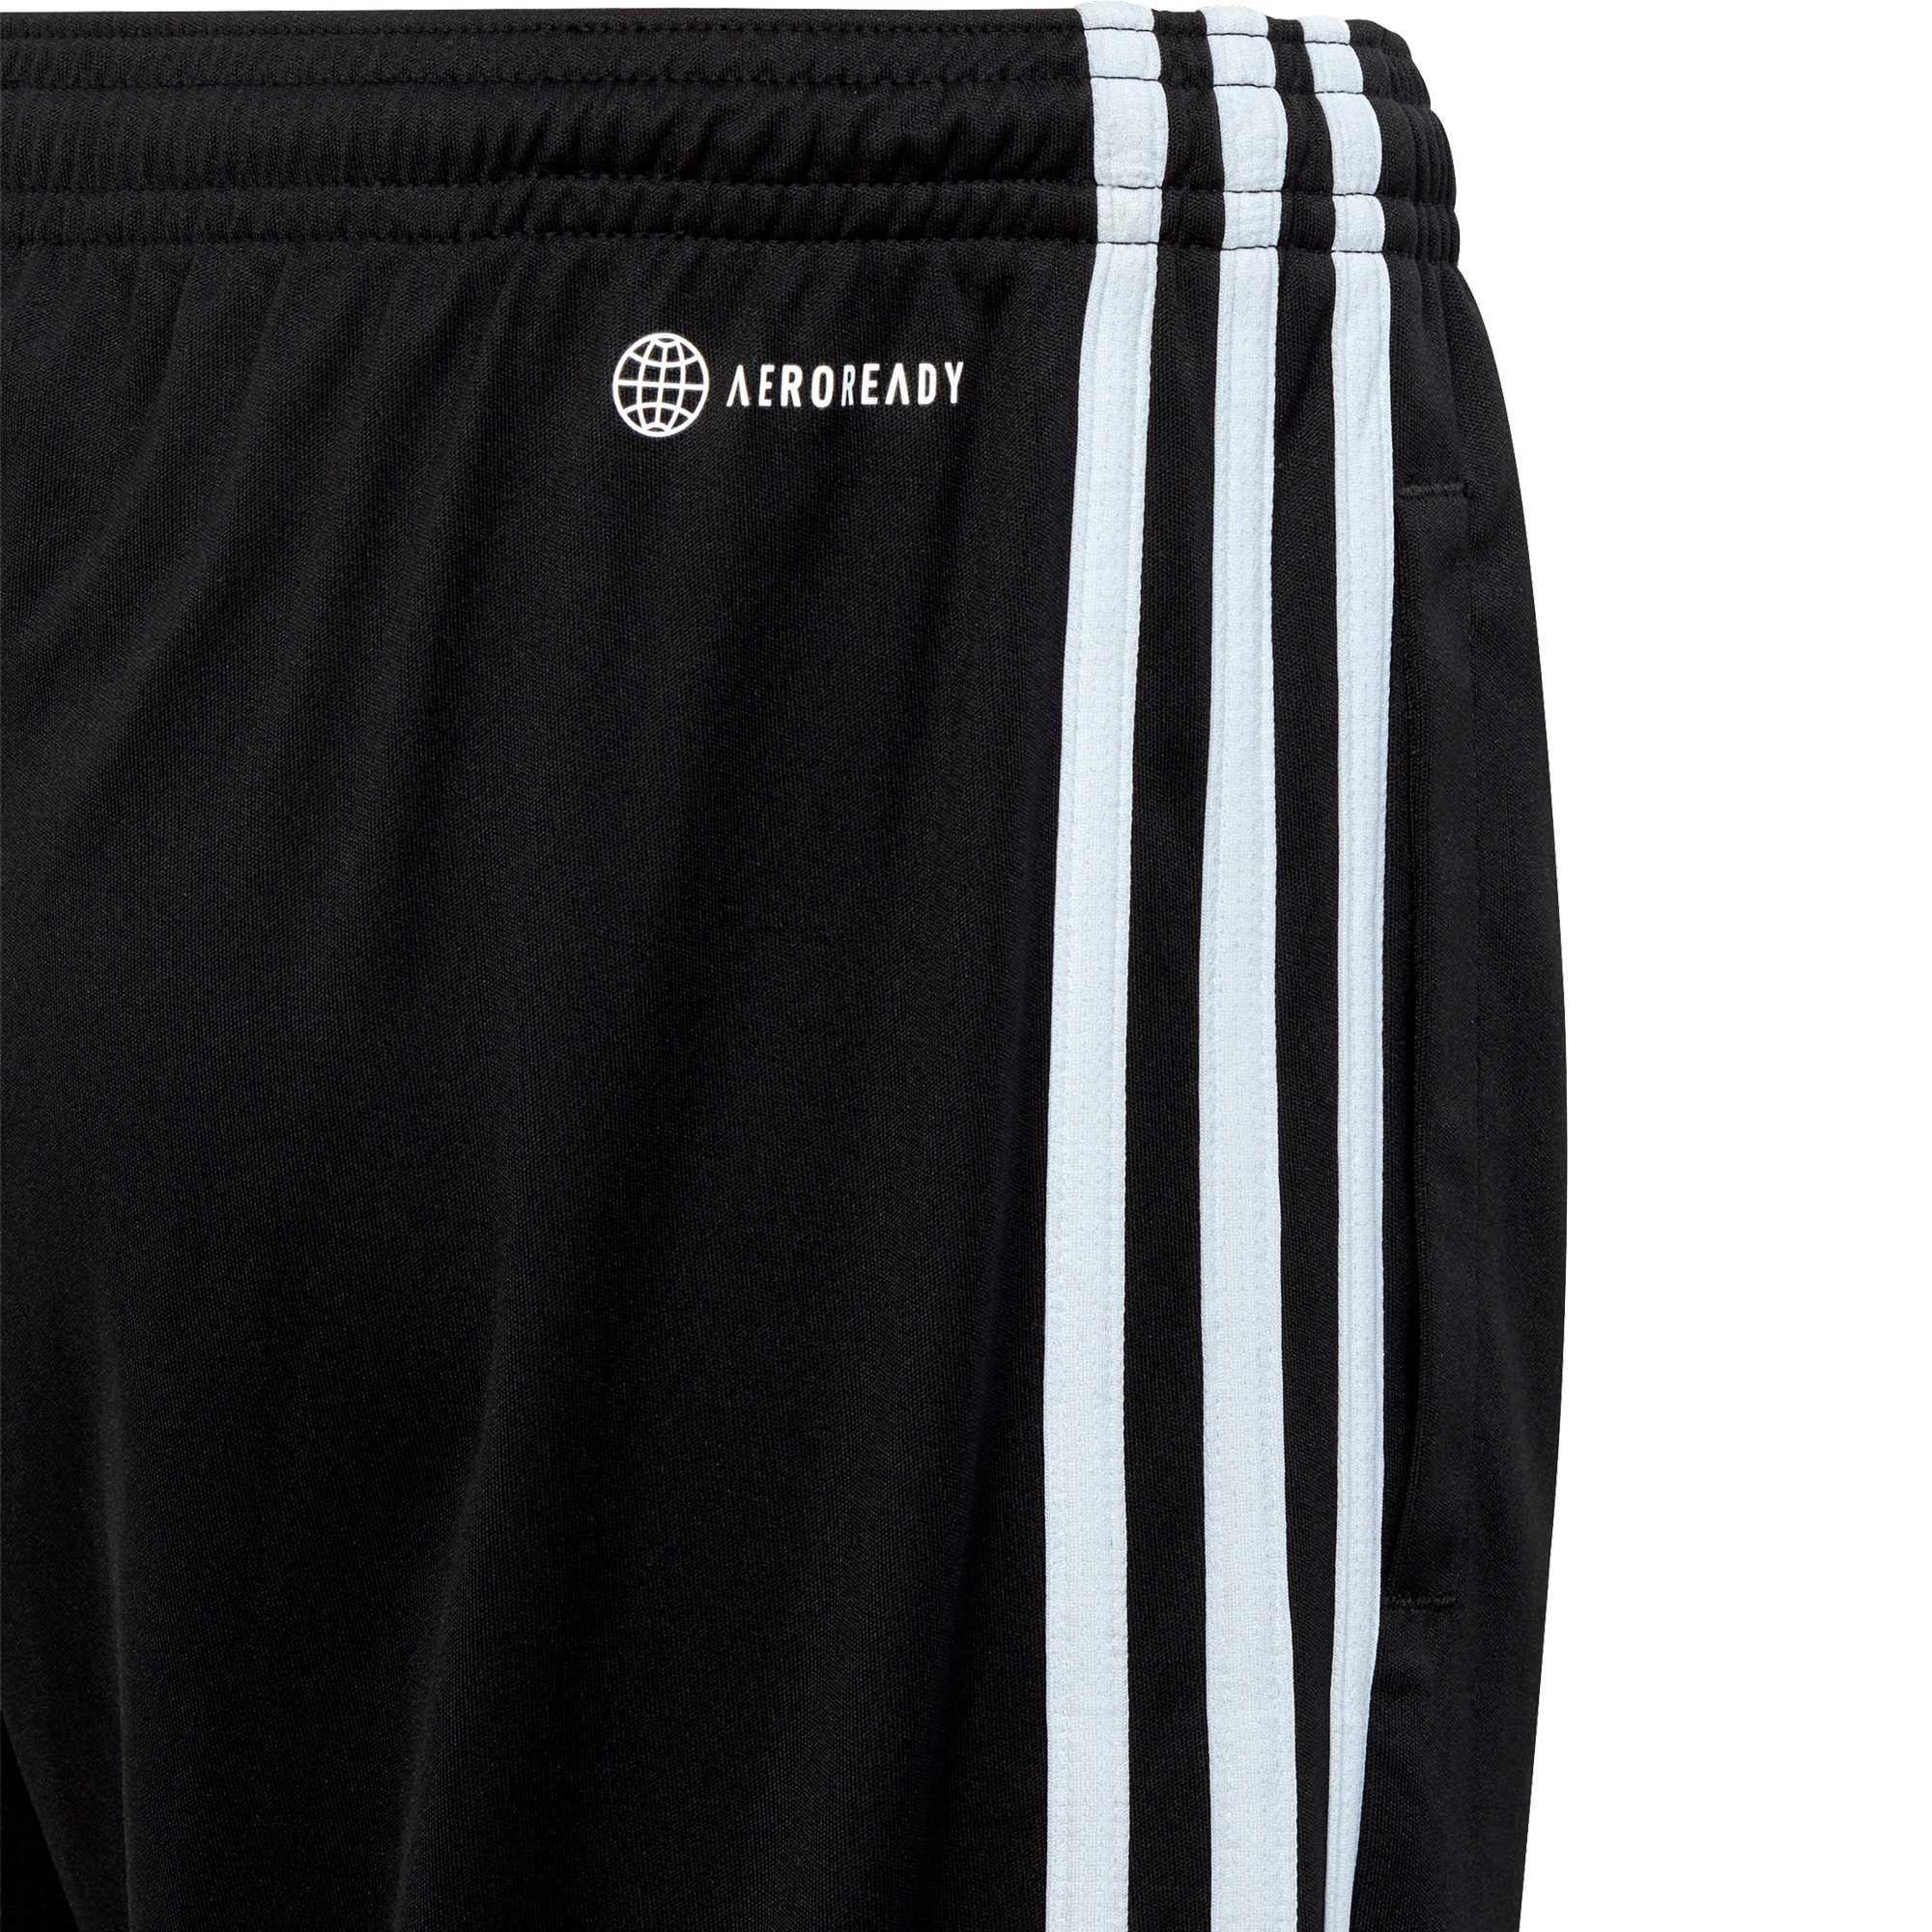 Shop Train adidas Sport Kids black - 3-Stripes Aeroready Bittl at Essentials Shorts